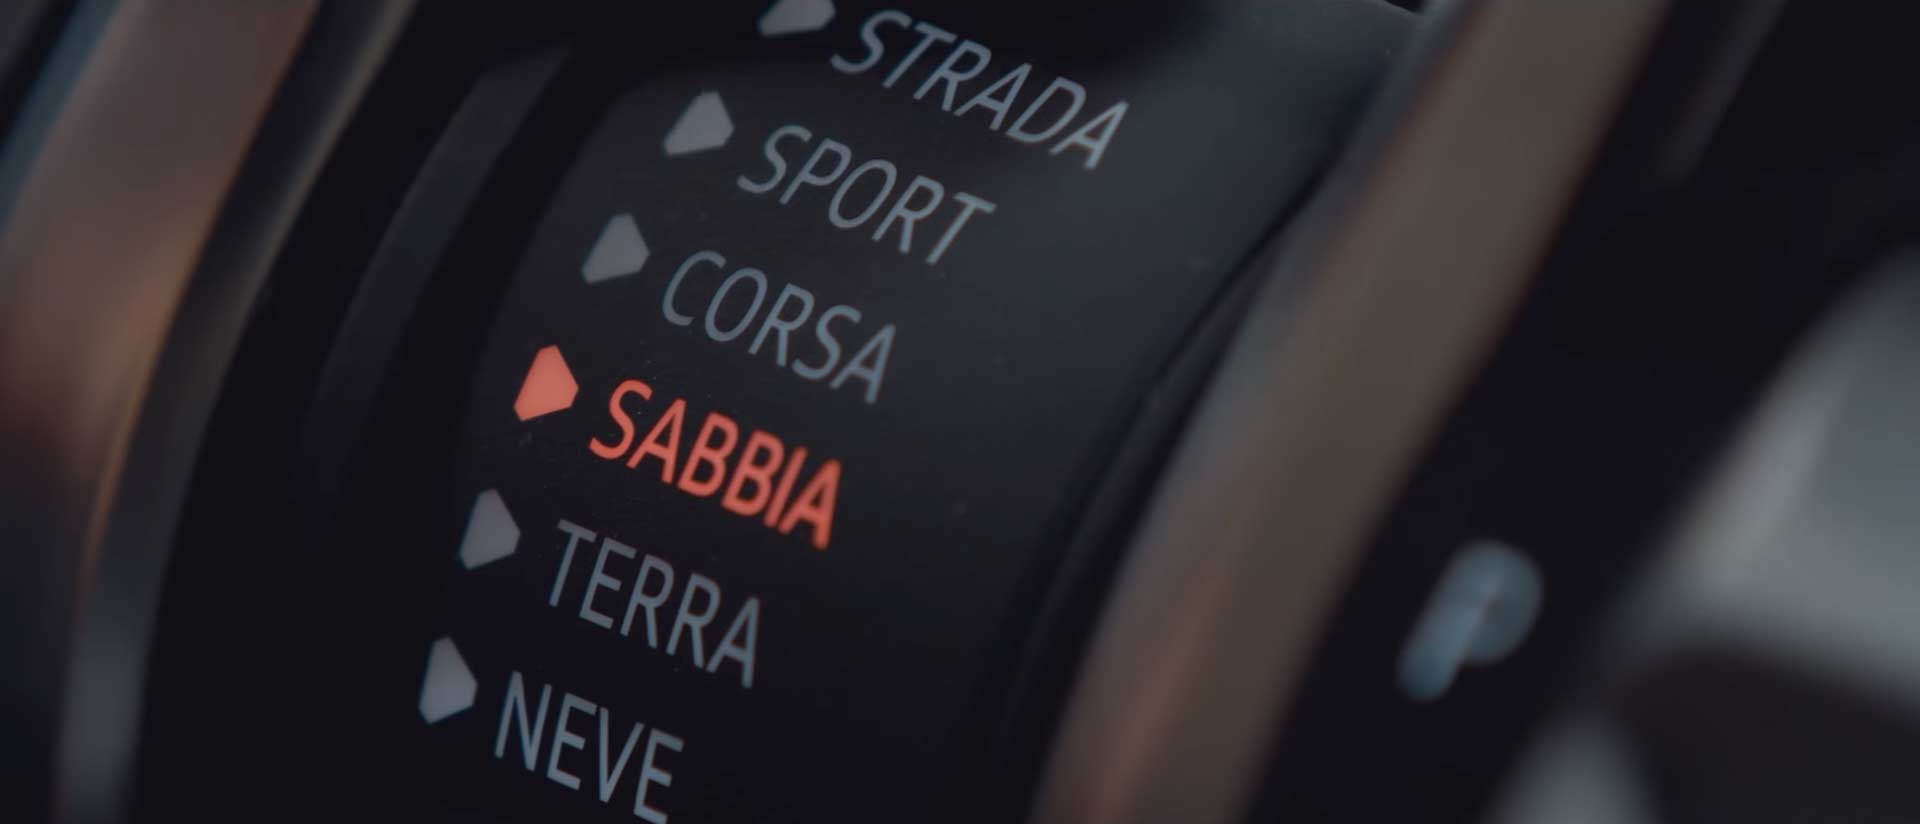 Lamborghini-Urus-Anima-switch-Sabbia-mode